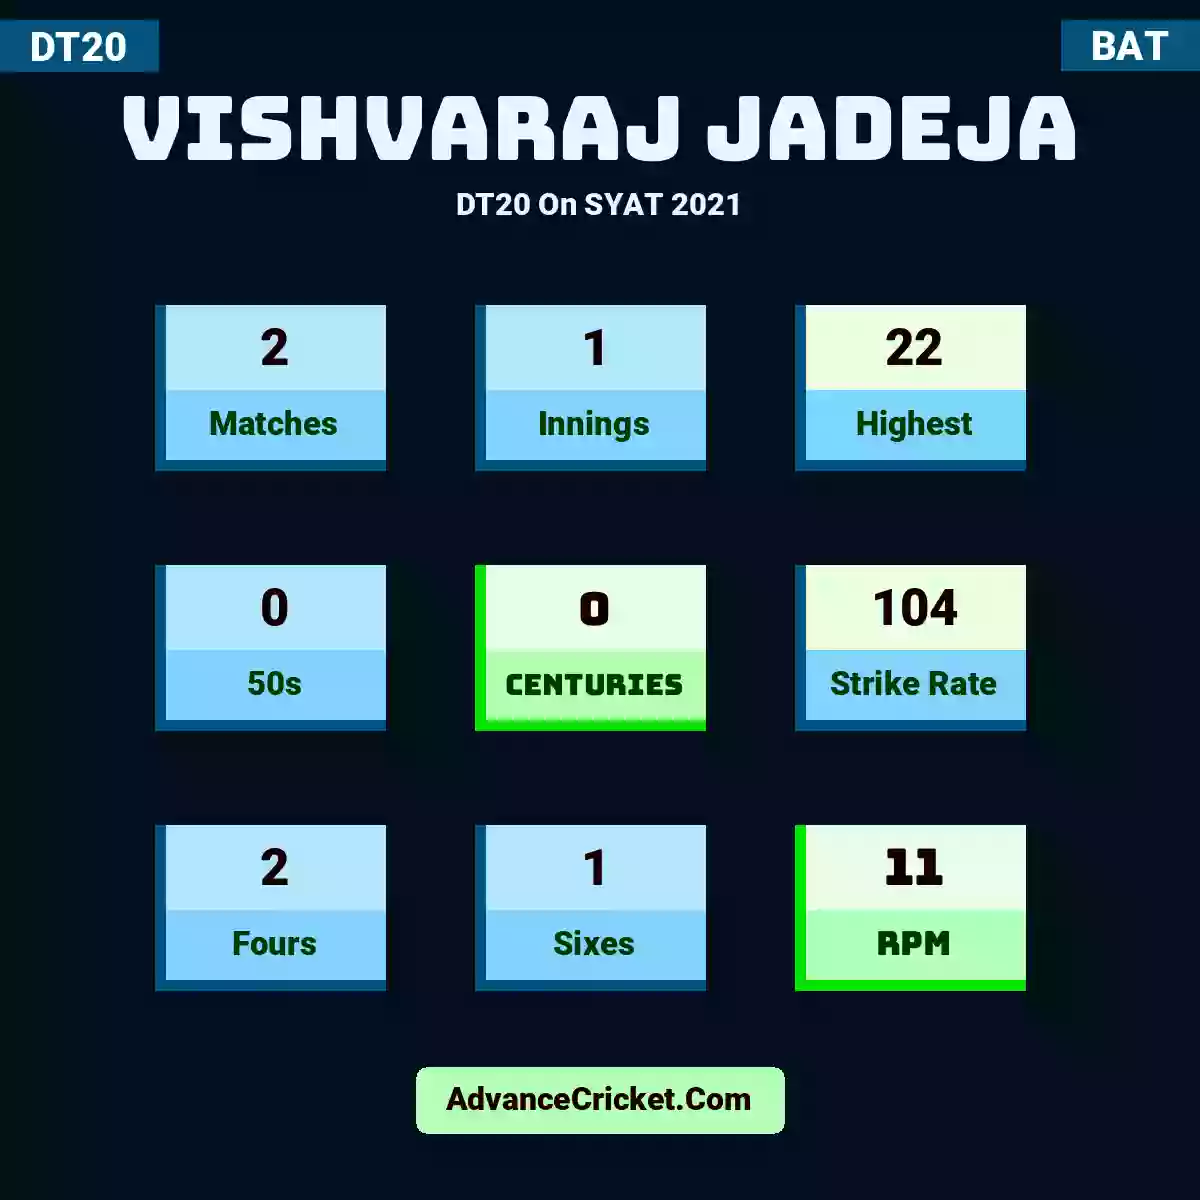 Vishvaraj Jadeja DT20  On SYAT 2021, Vishvaraj Jadeja played 2 matches, scored 22 runs as highest, 0 half-centuries, and 0 centuries, with a strike rate of 104. V.Jadeja hit 2 fours and 1 sixes, with an RPM of 11.